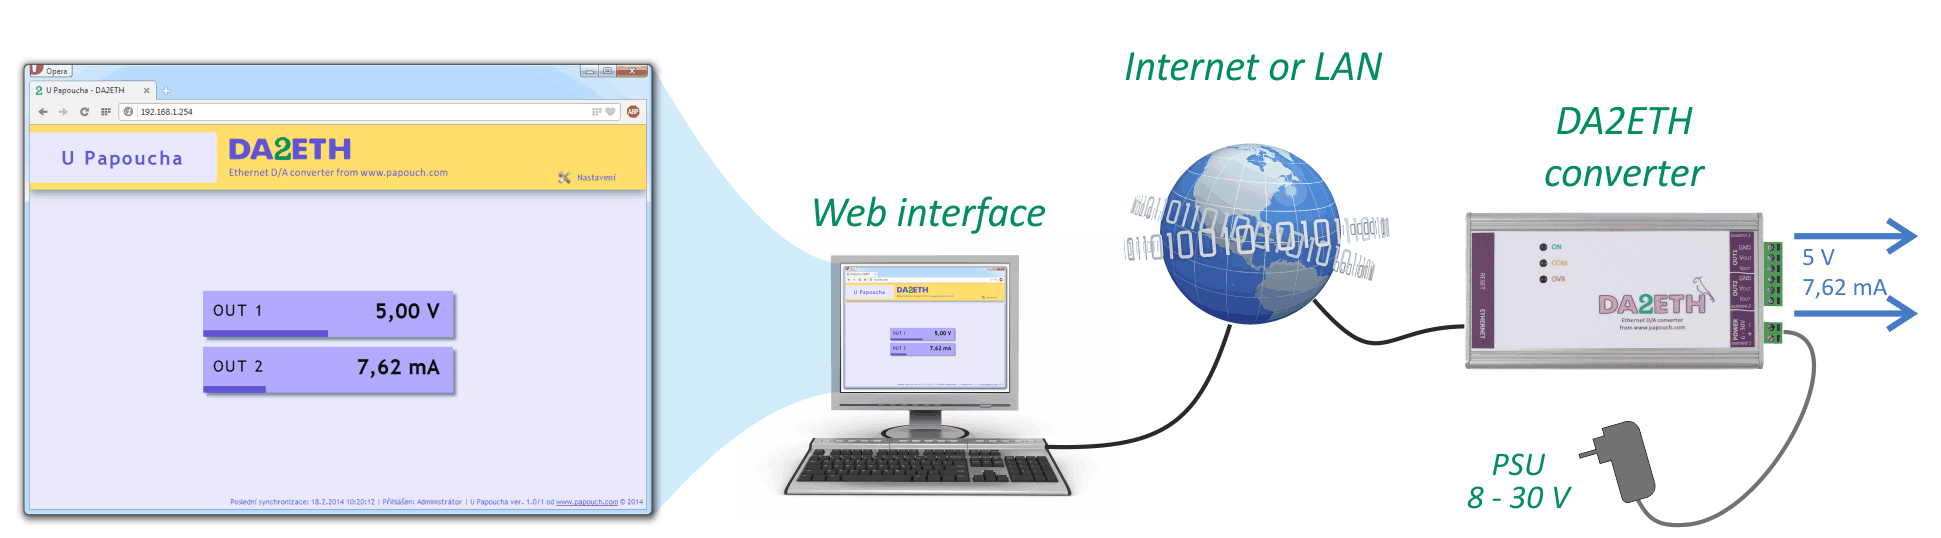 Manual input using WEB interface